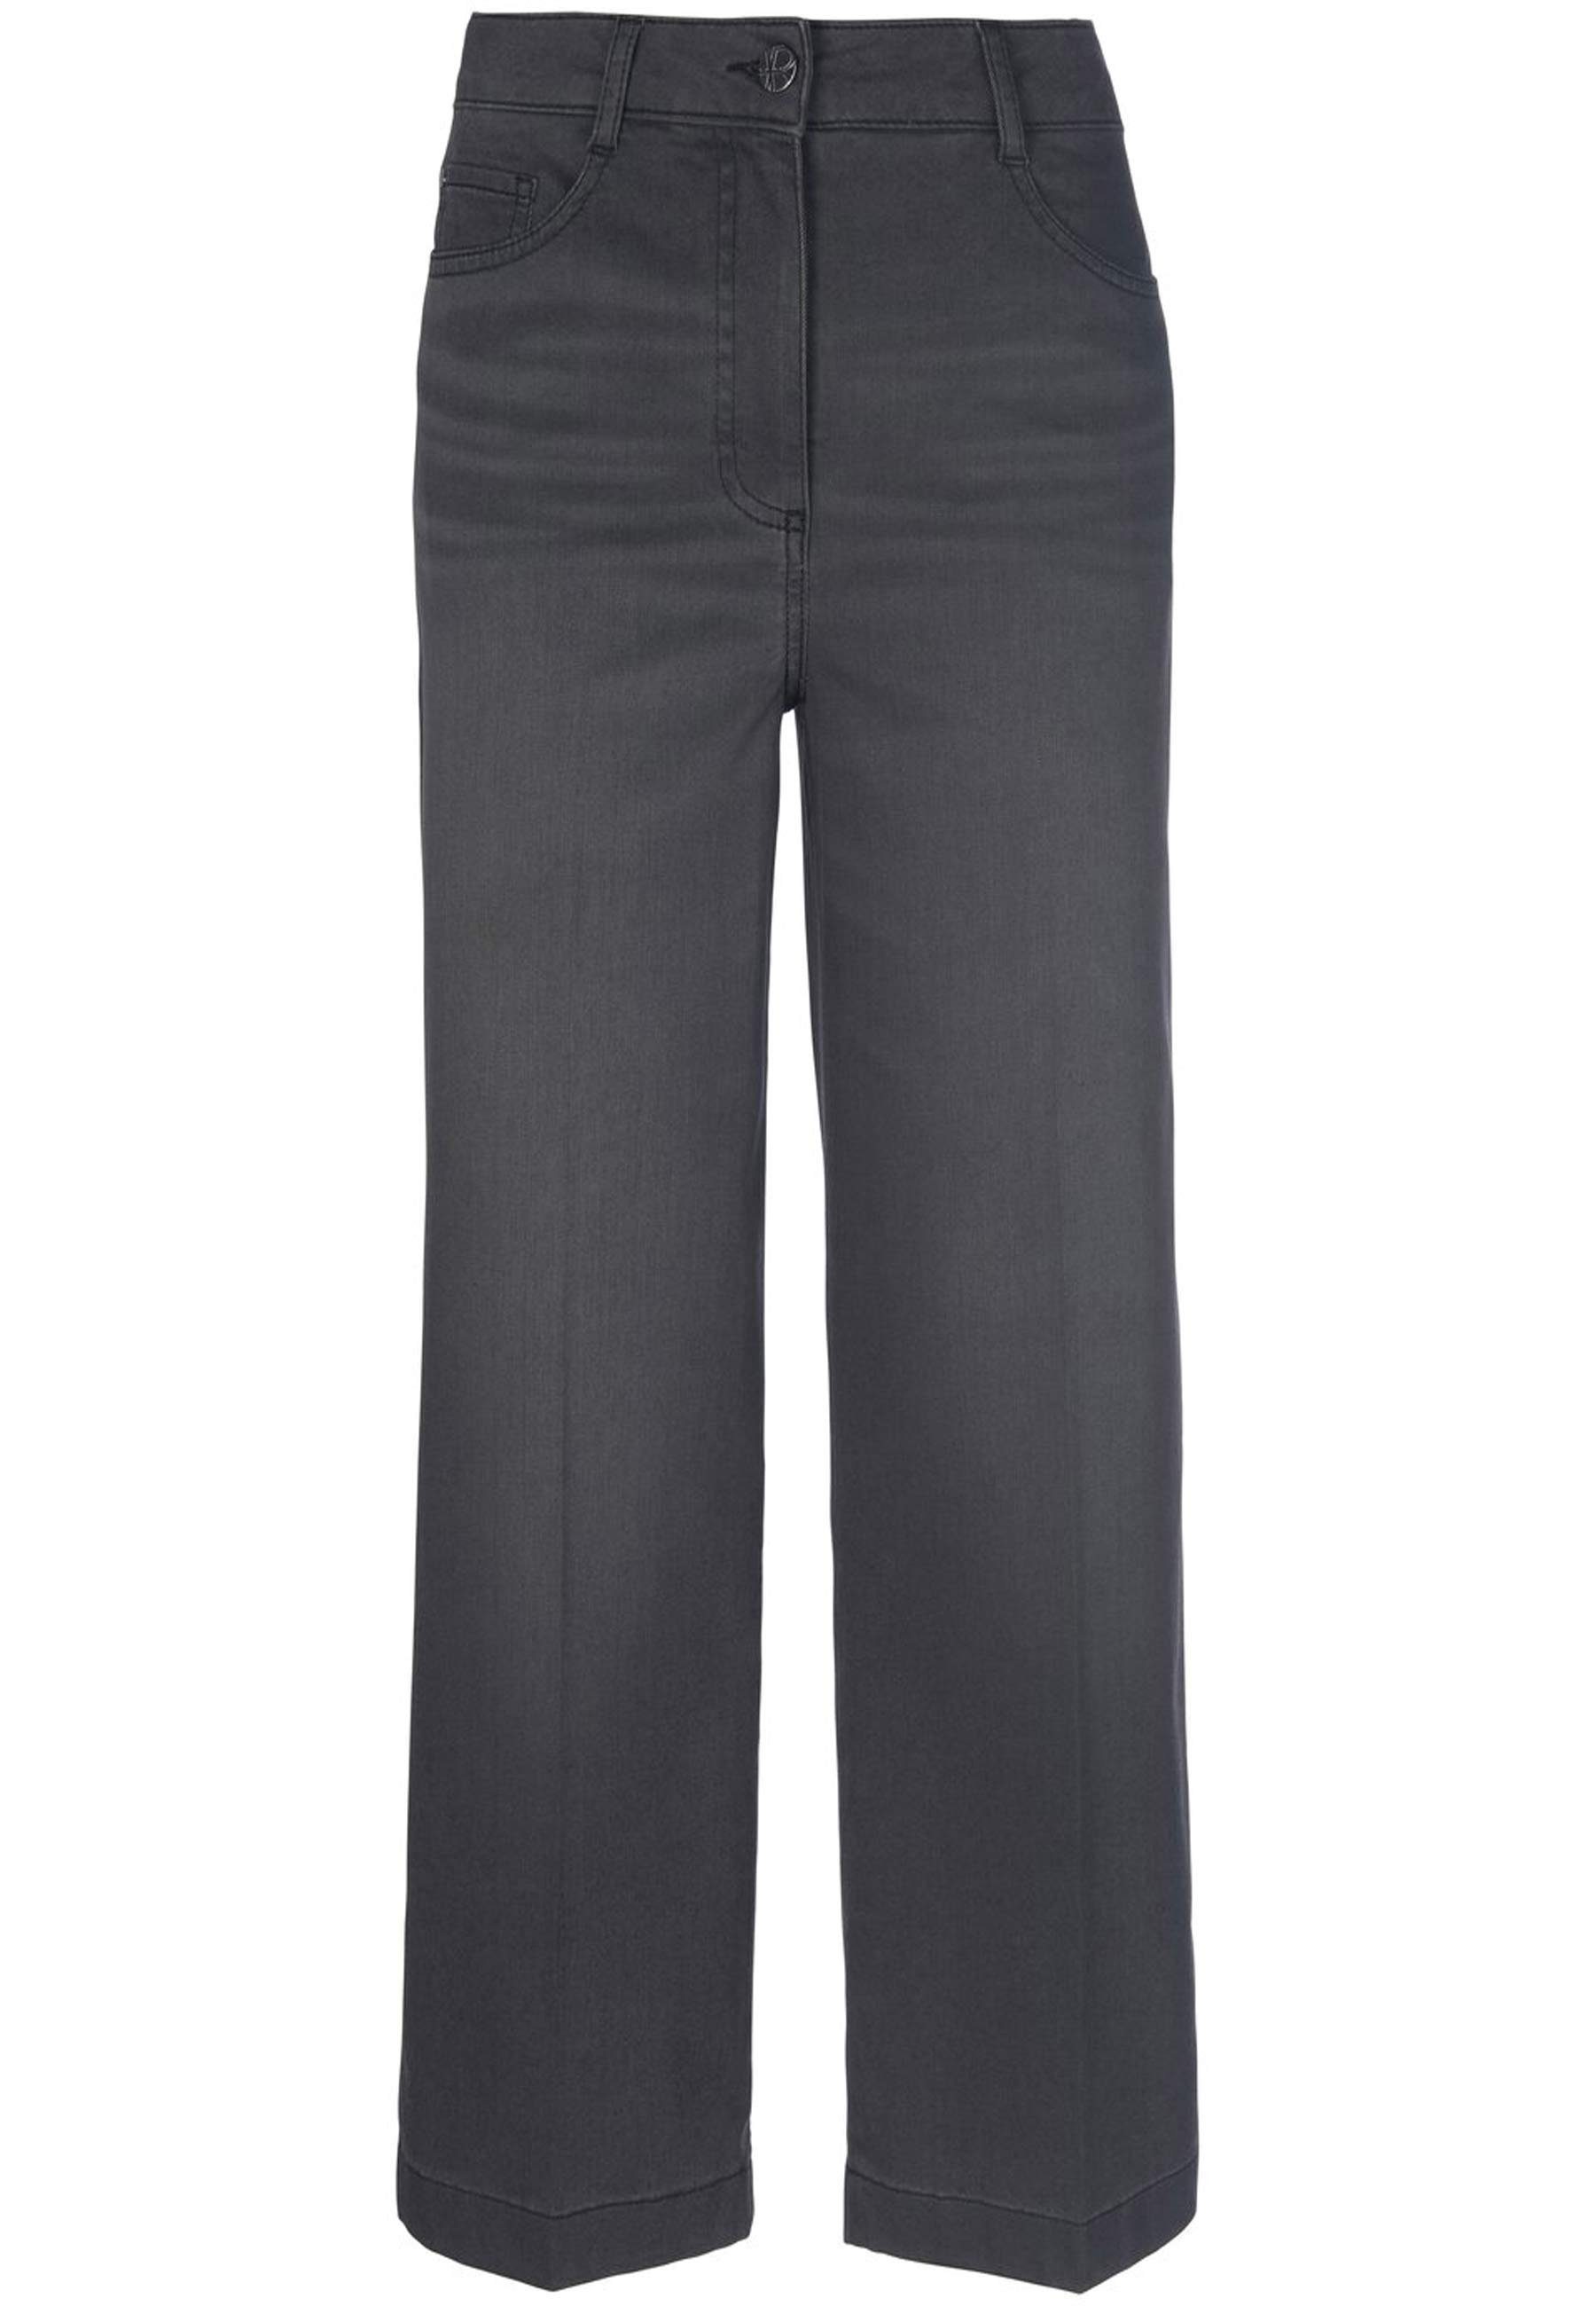 Basler 5-Pocket-Jeans Cotton mit klassischem Design hellgrau